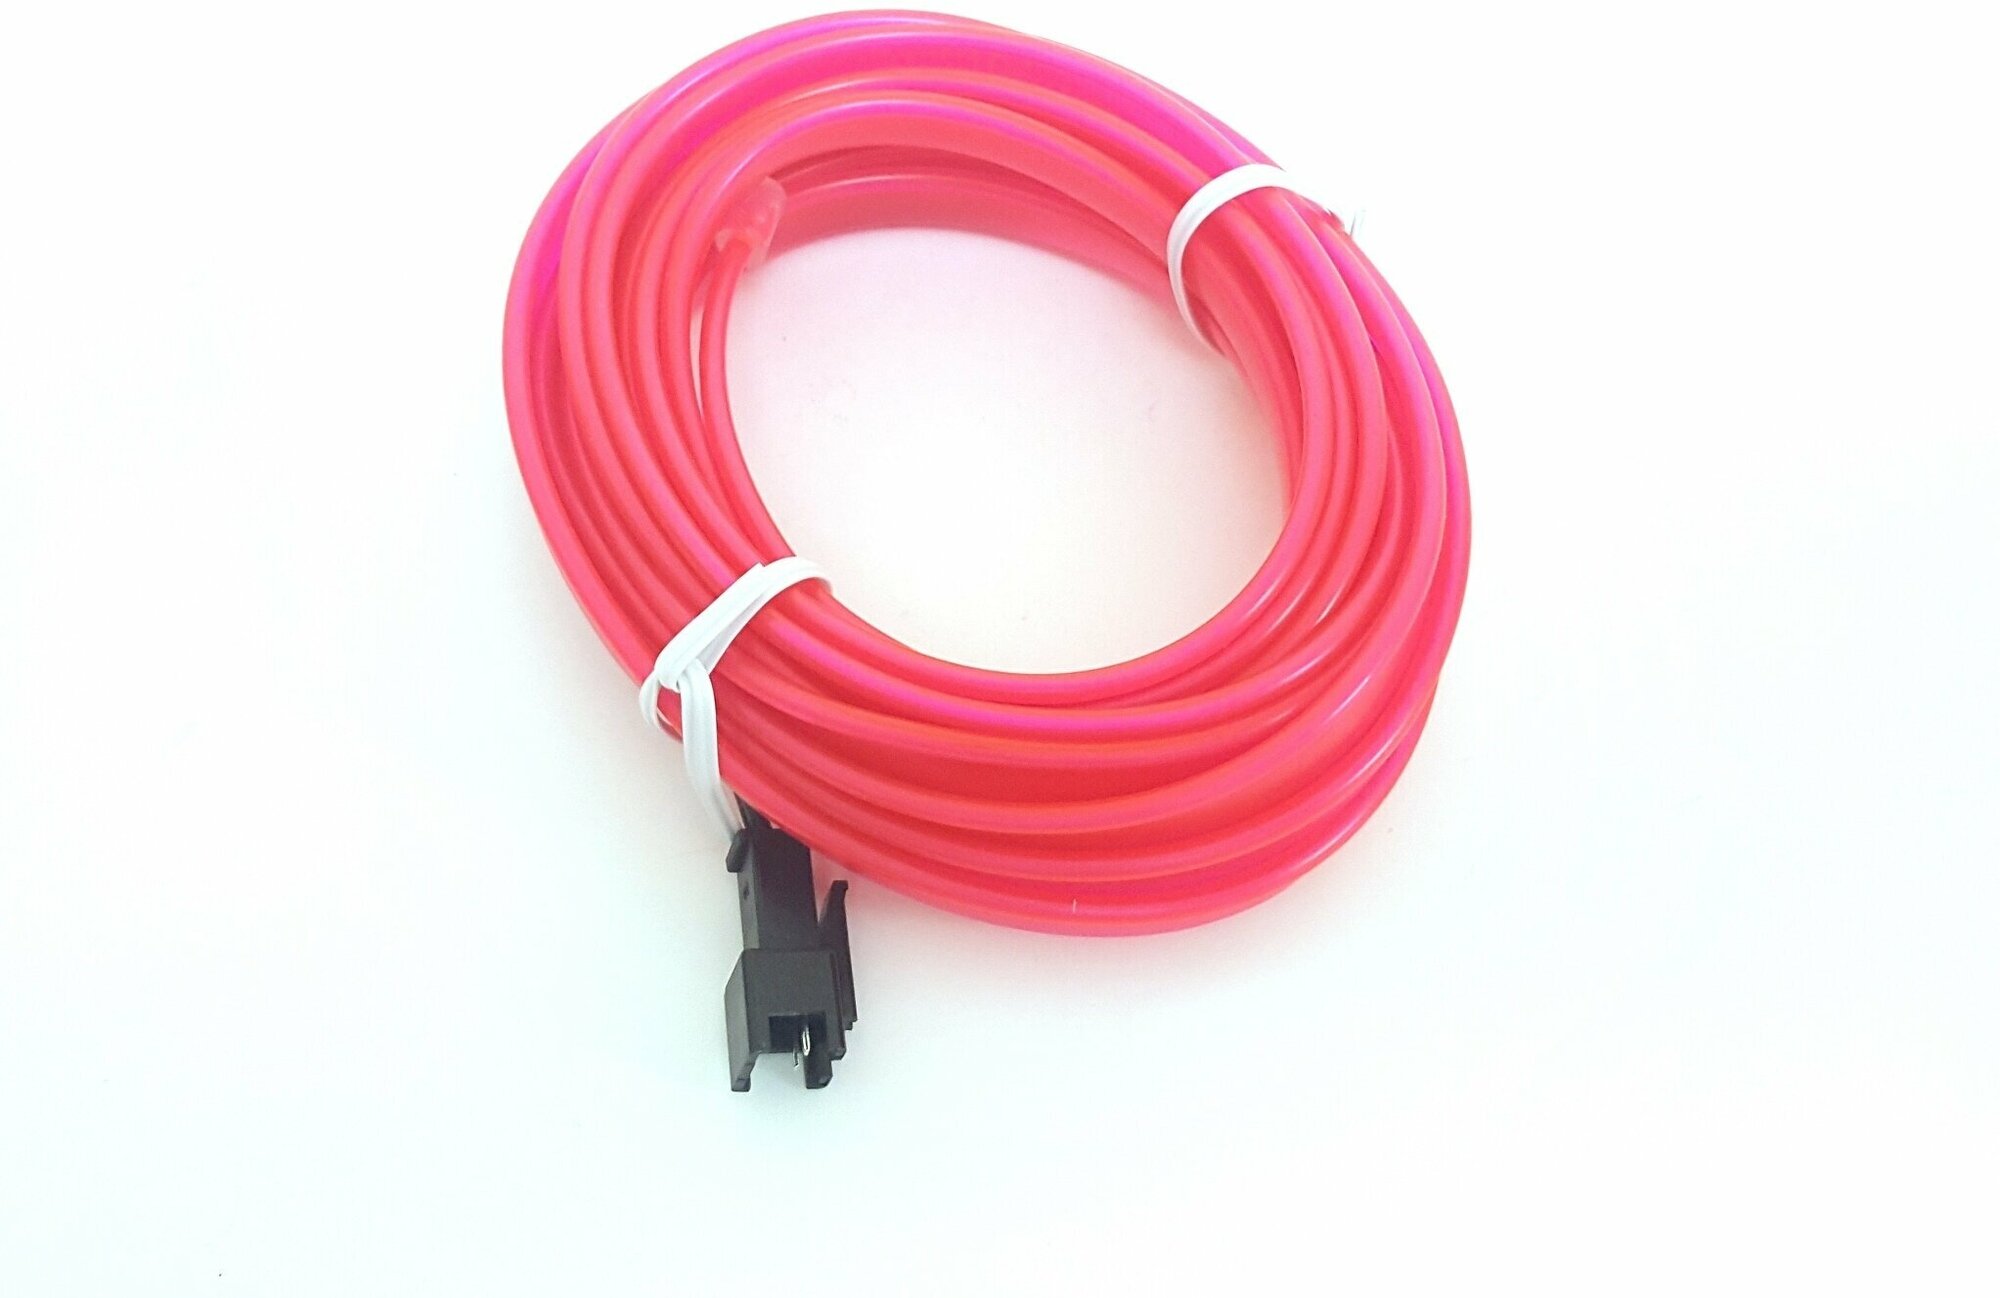 Led гибкий неон узкий (EL провод) 2,3 мм, розовый, 3 метра, с разъемом для подключения